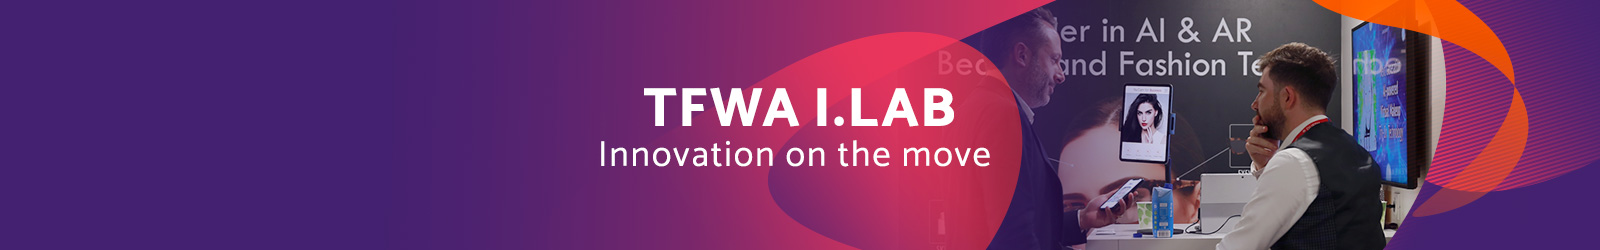 TFWA i.lab Review